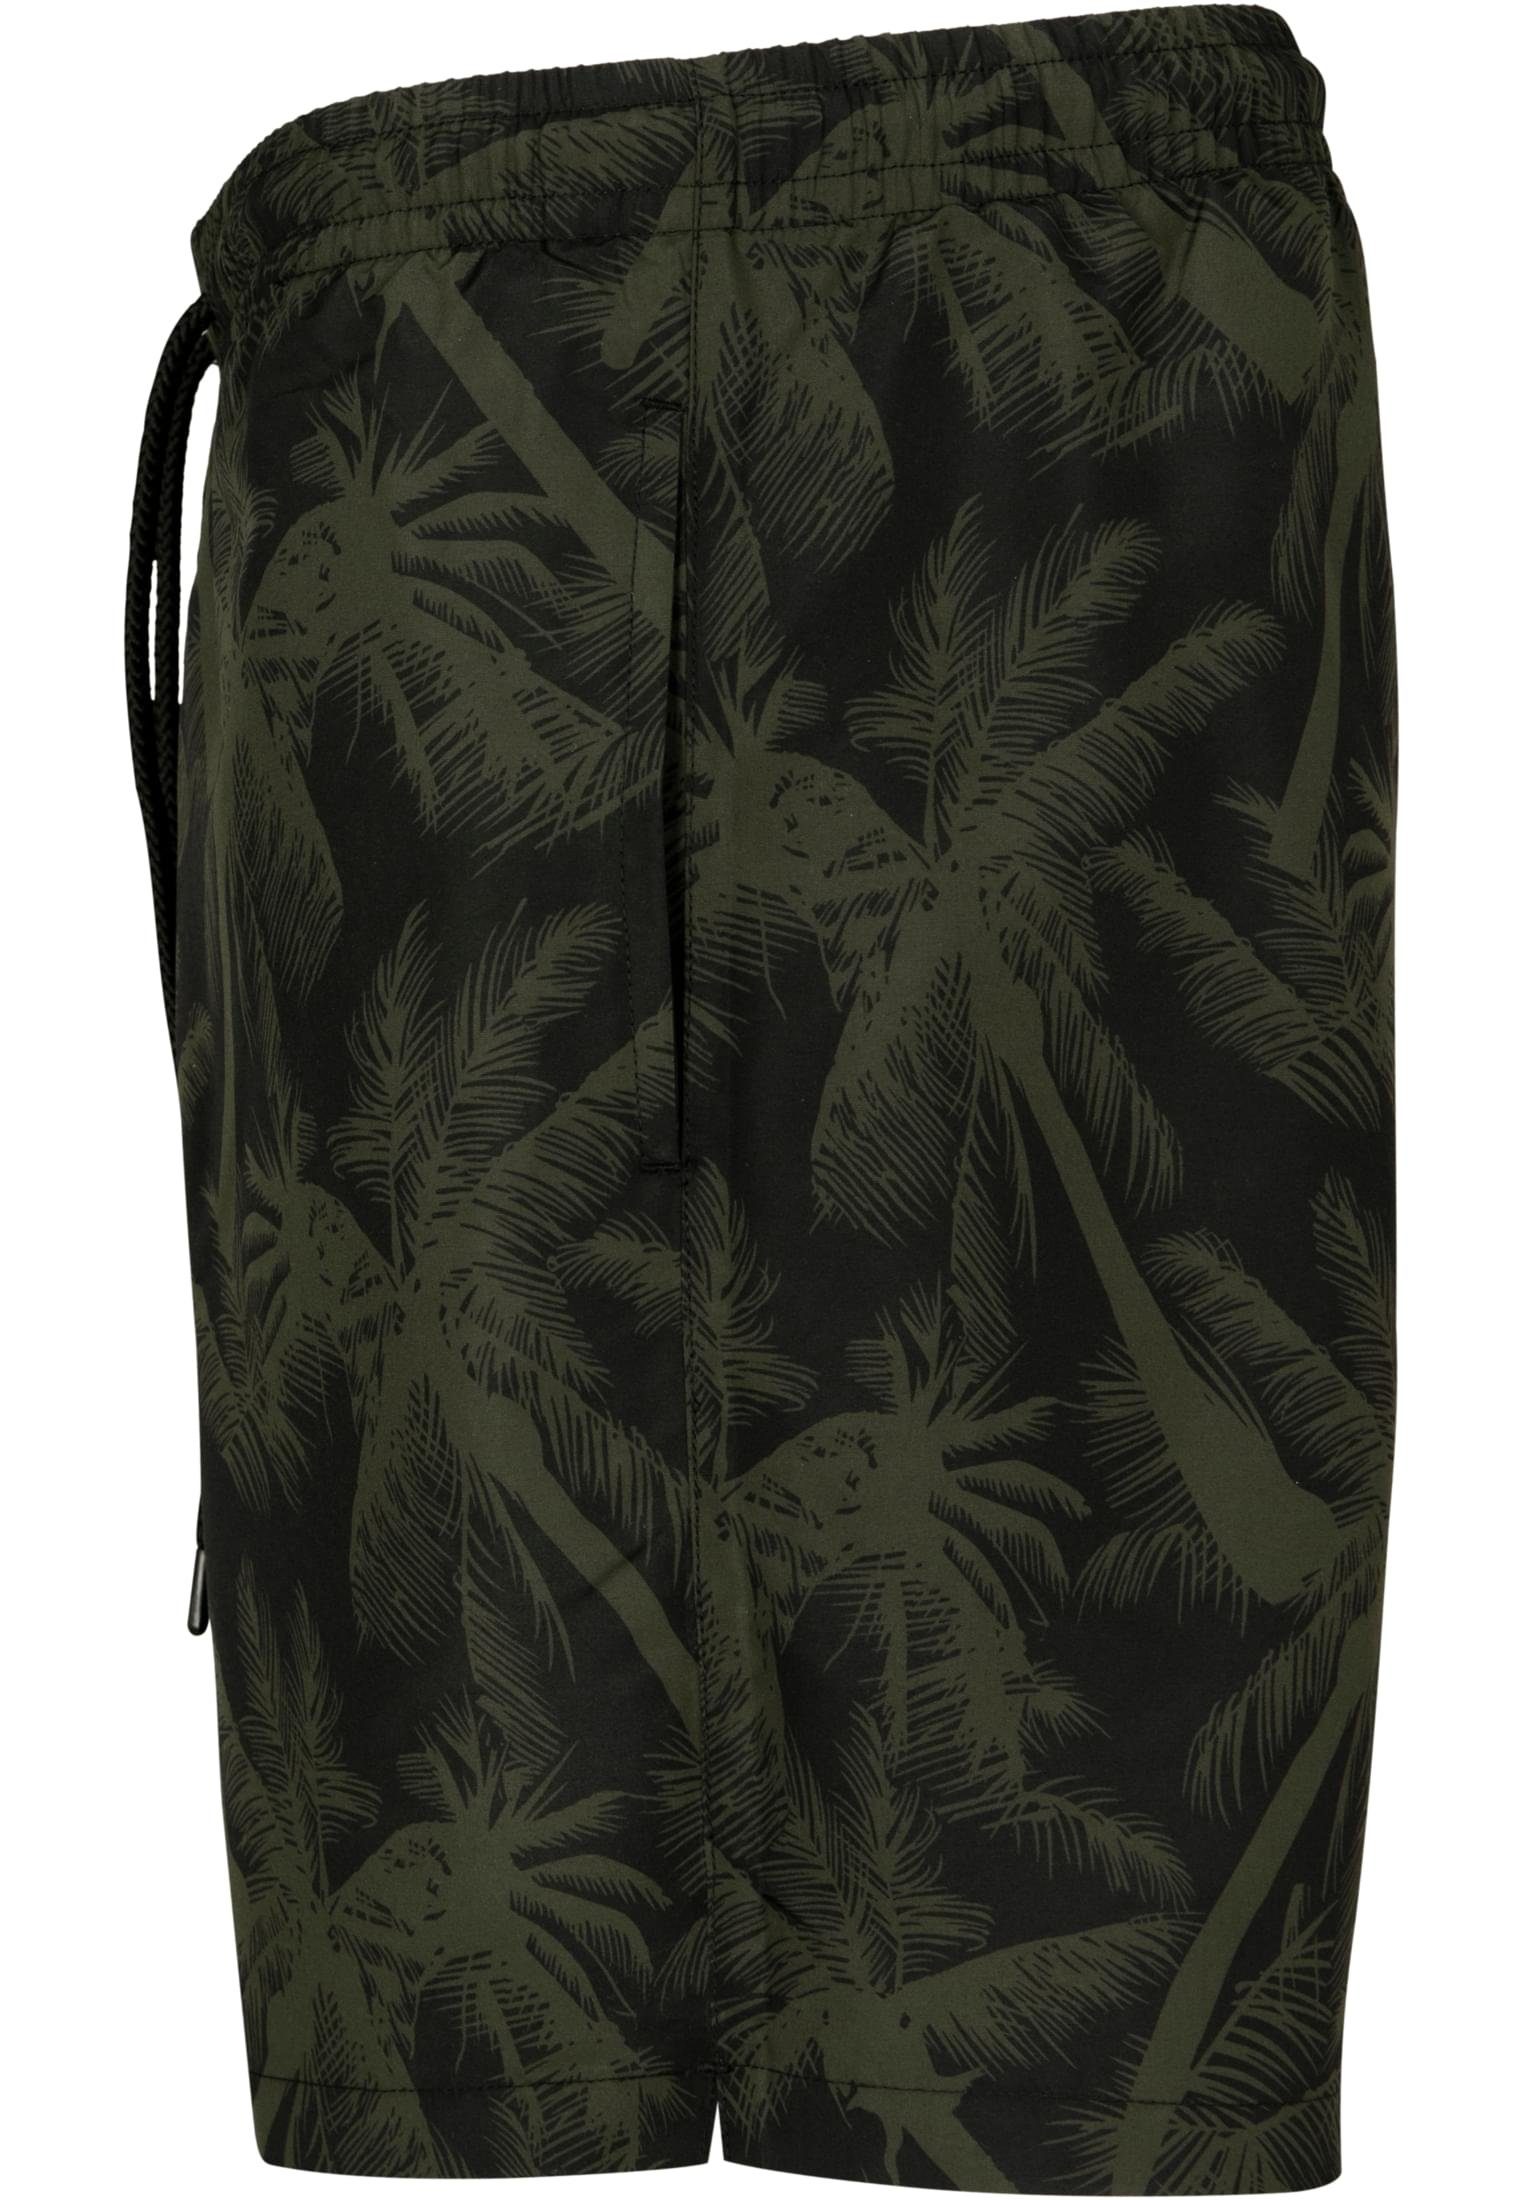 Herren Swim palm/olive CLASSICS URBAN Badeshorts Pattern Shorts